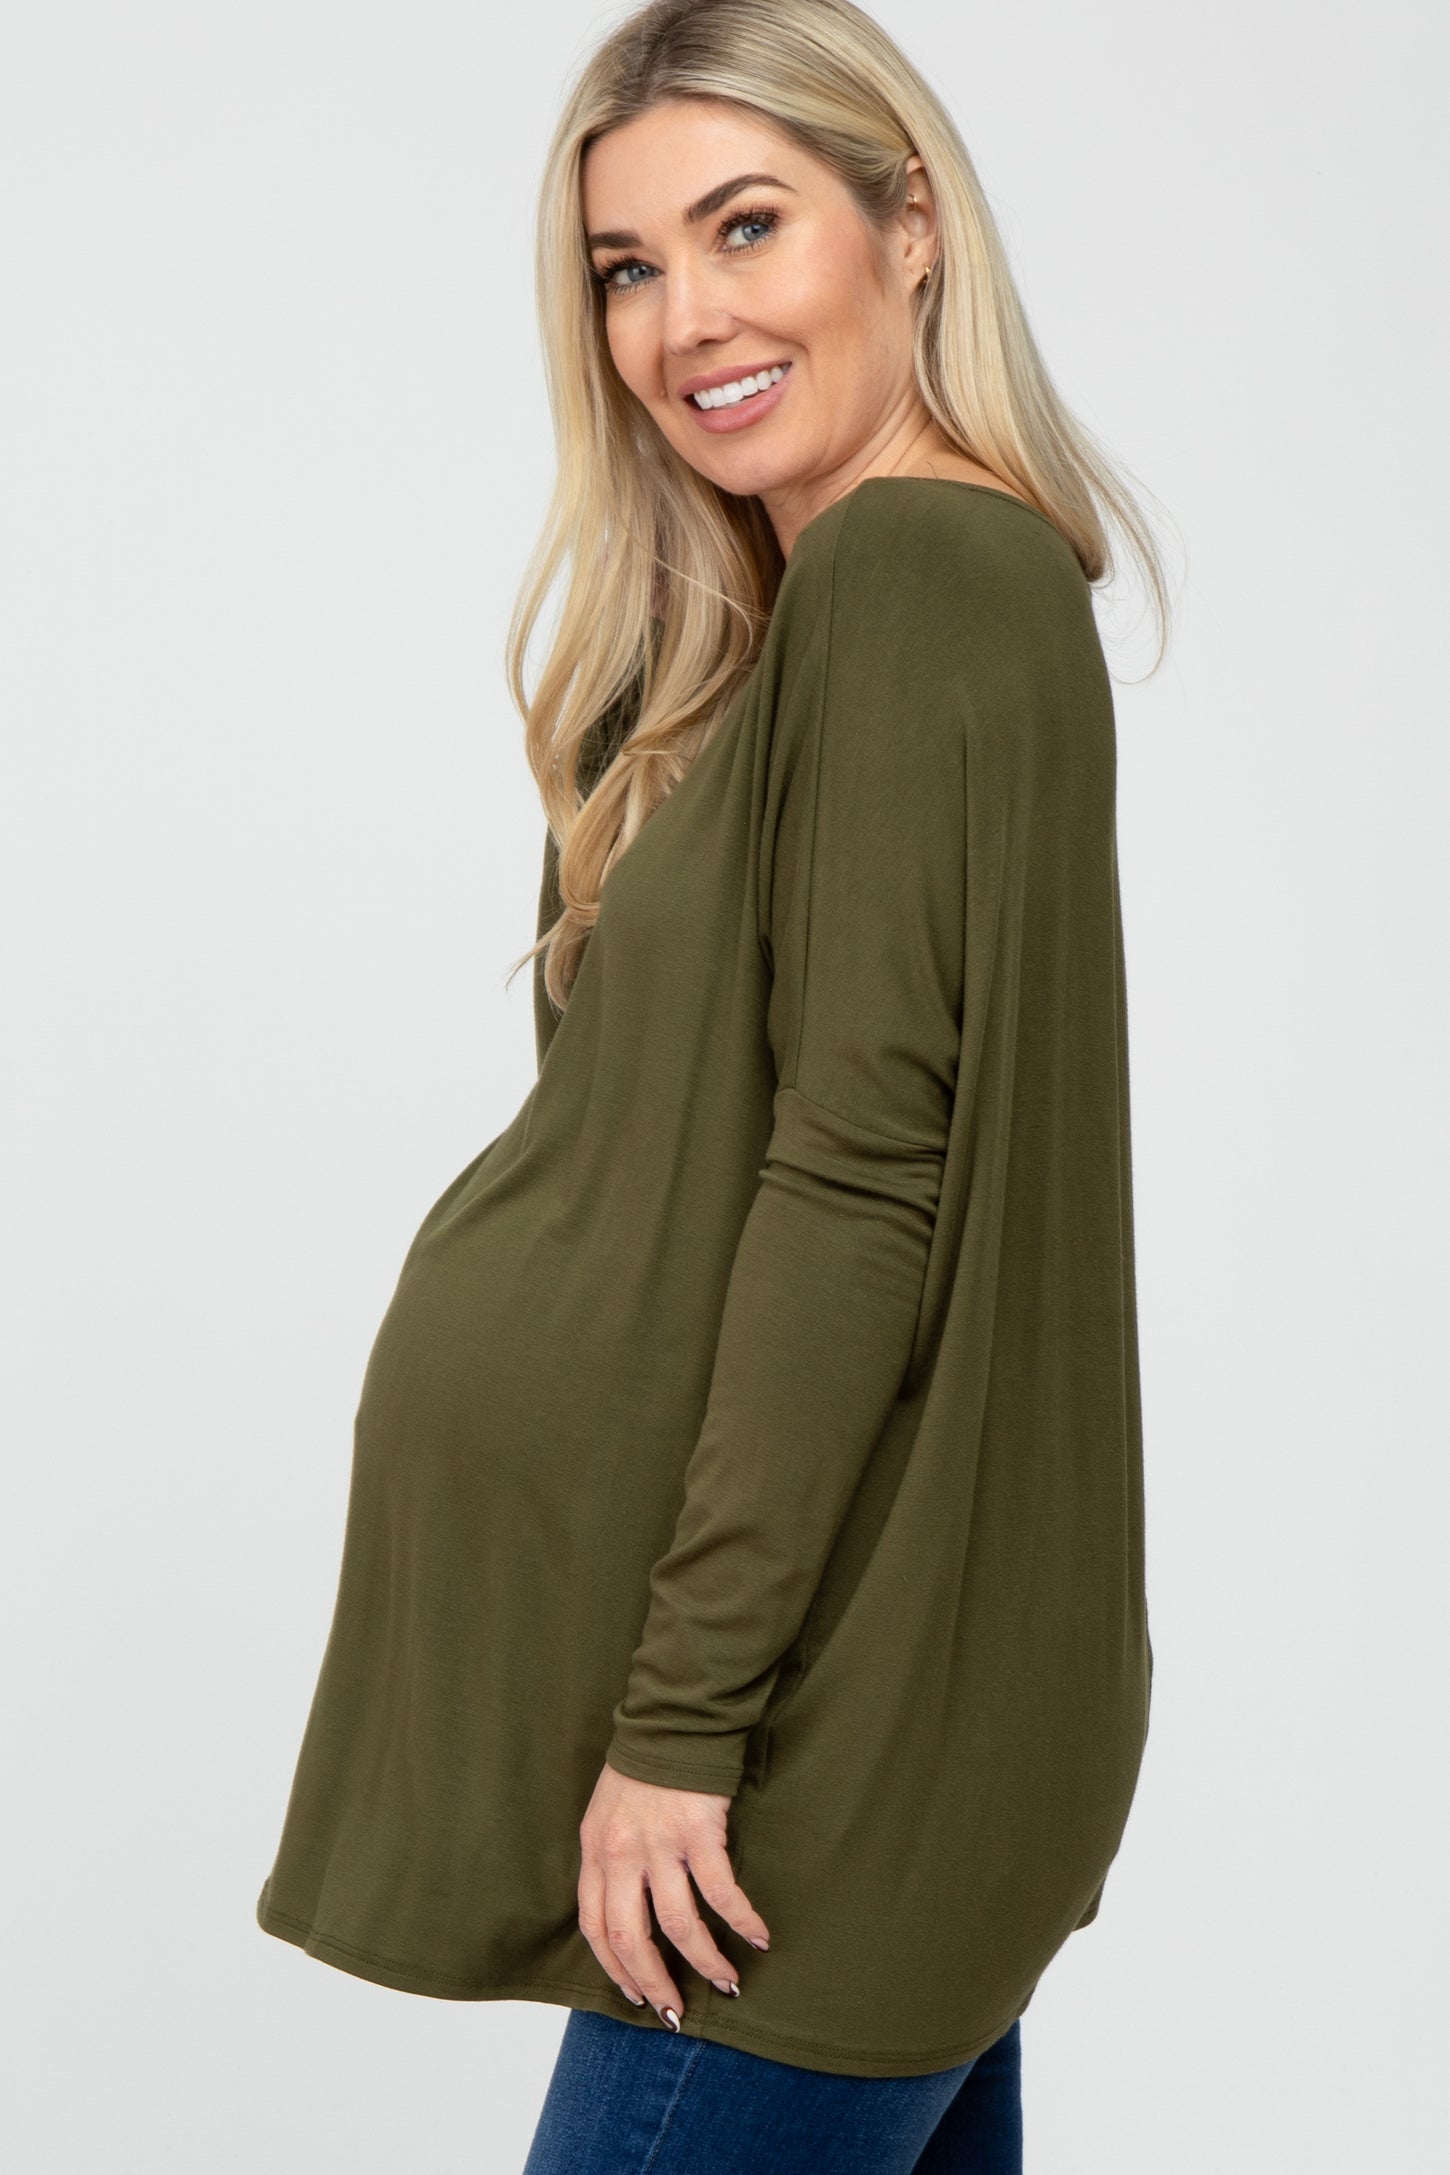 Olive Dolman Sleeve Maternity Tunic Top